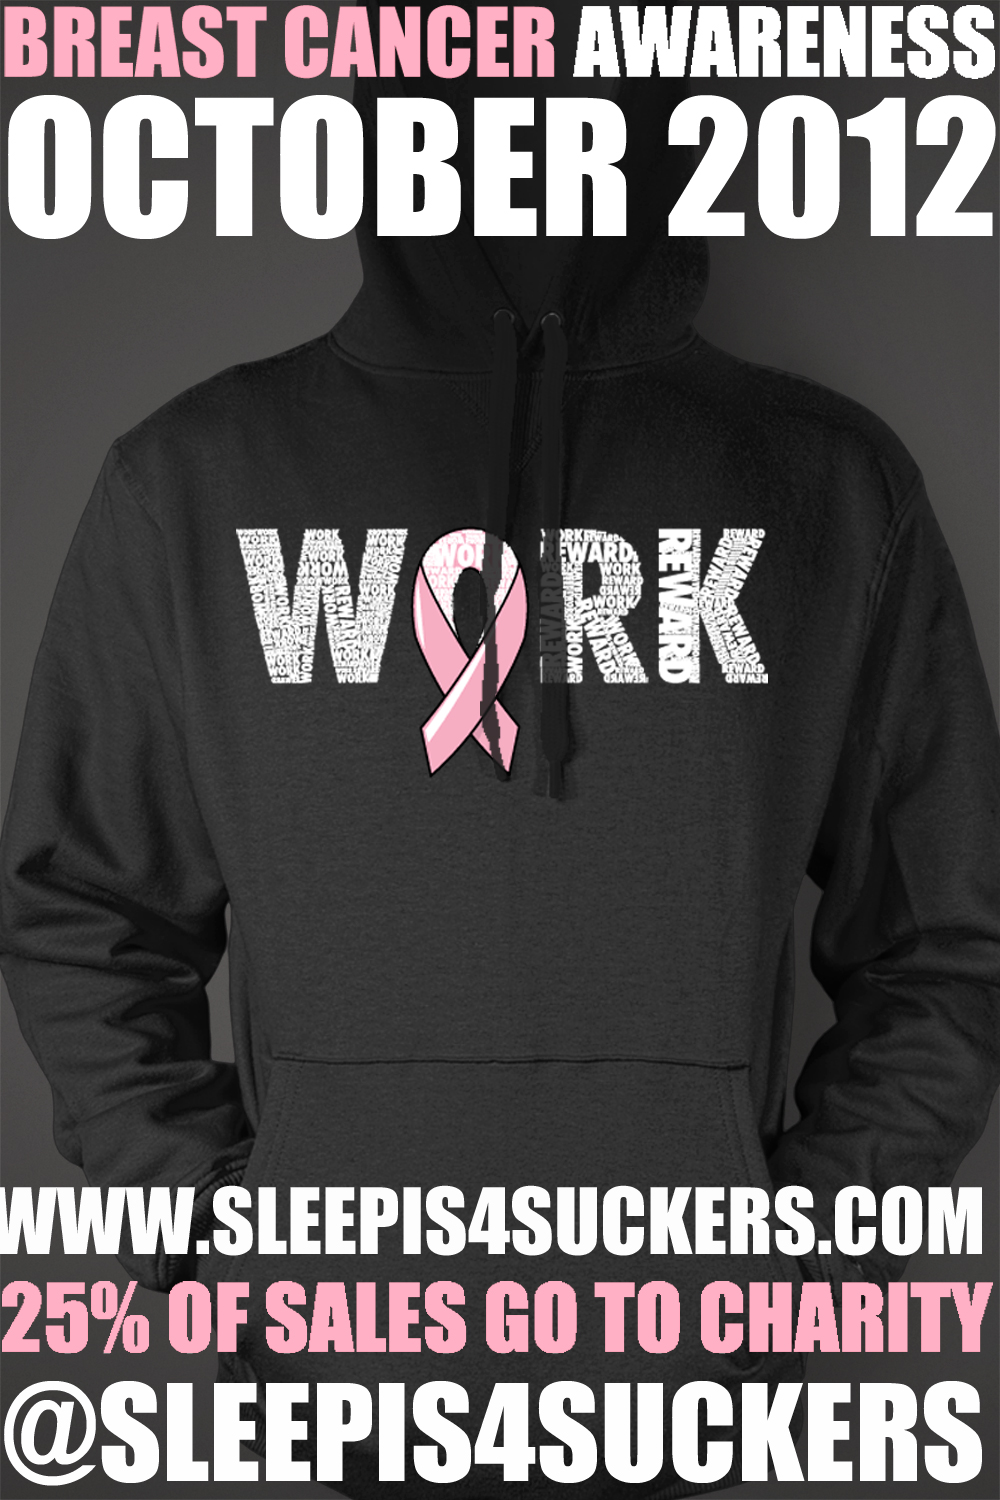 SI4SBLACK SI4S (@SleepIs4Suckers) Work/Reward Hoodies (Breast Cancer Awareness) (Men)  